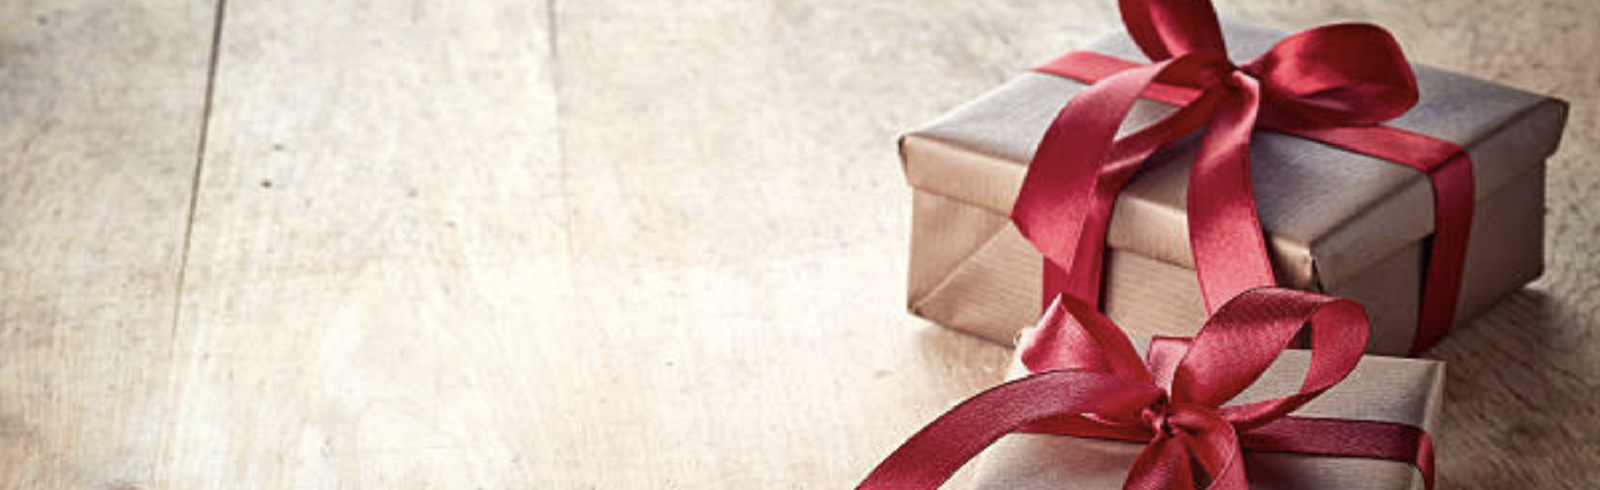 Hk gift box red ribbon 